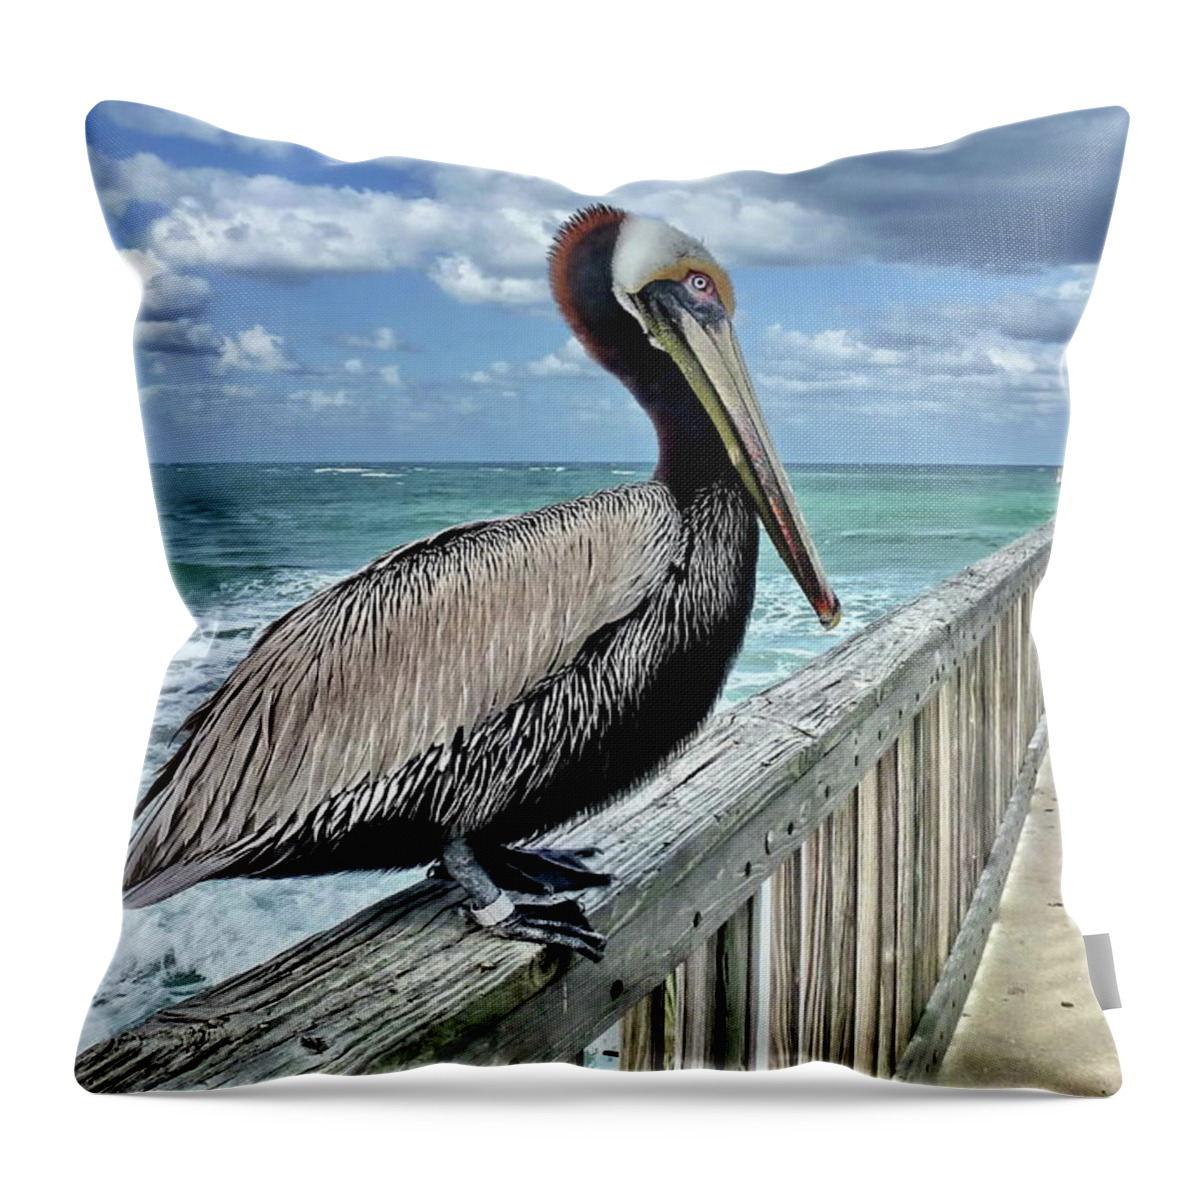 Brown Pelican Throw Pillow featuring the photograph Brown Pelican, Atlantic by Lyuba Filatova